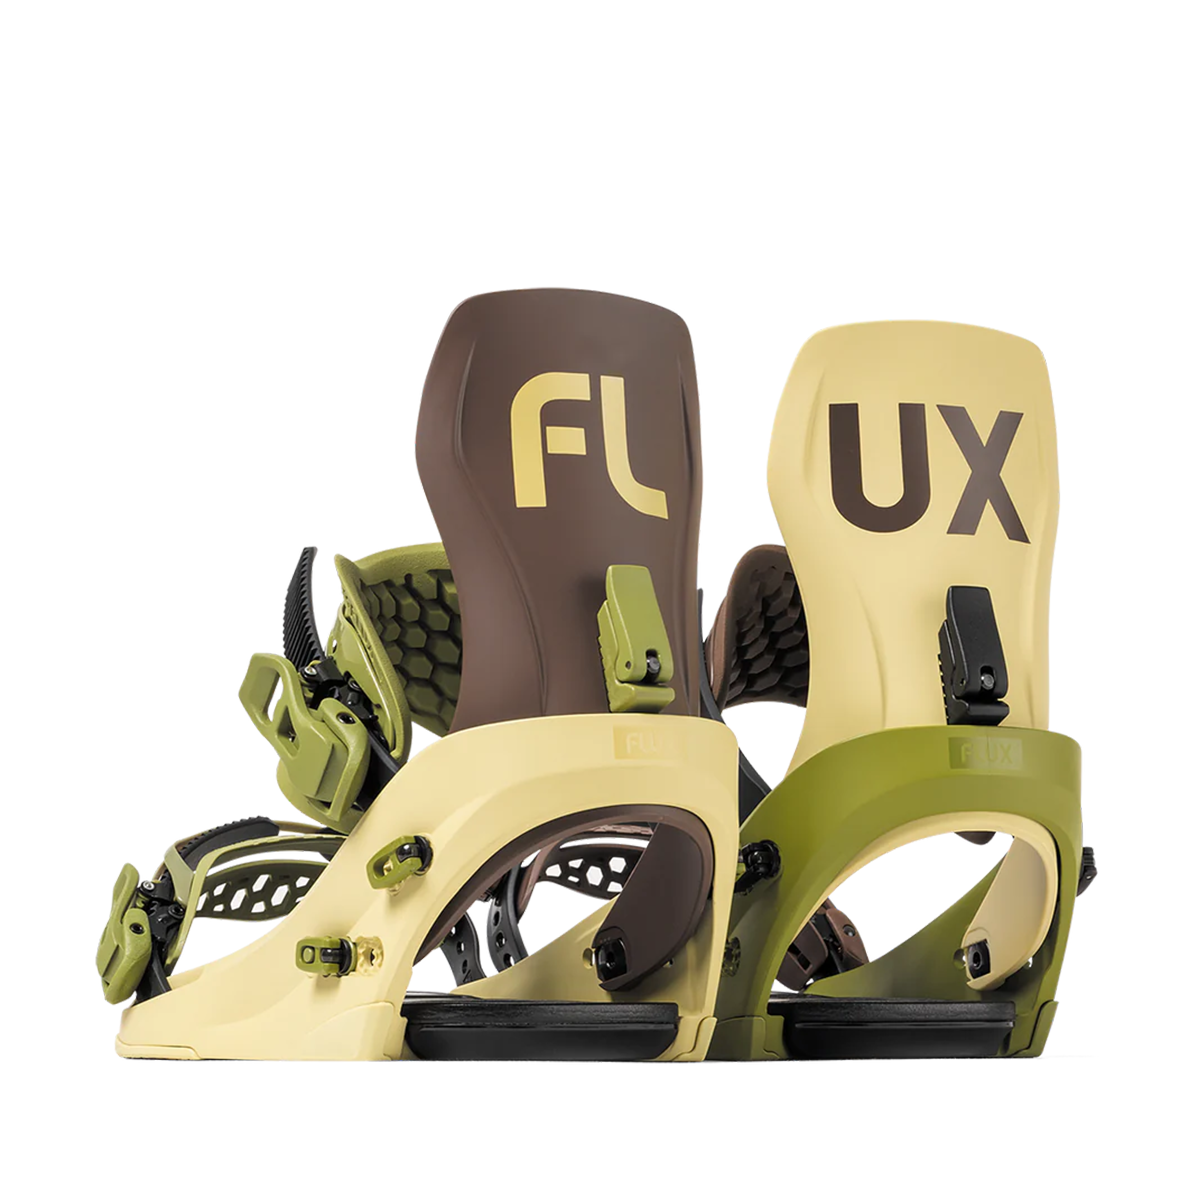 Flux CV Snowboard Bindings - Multi Color